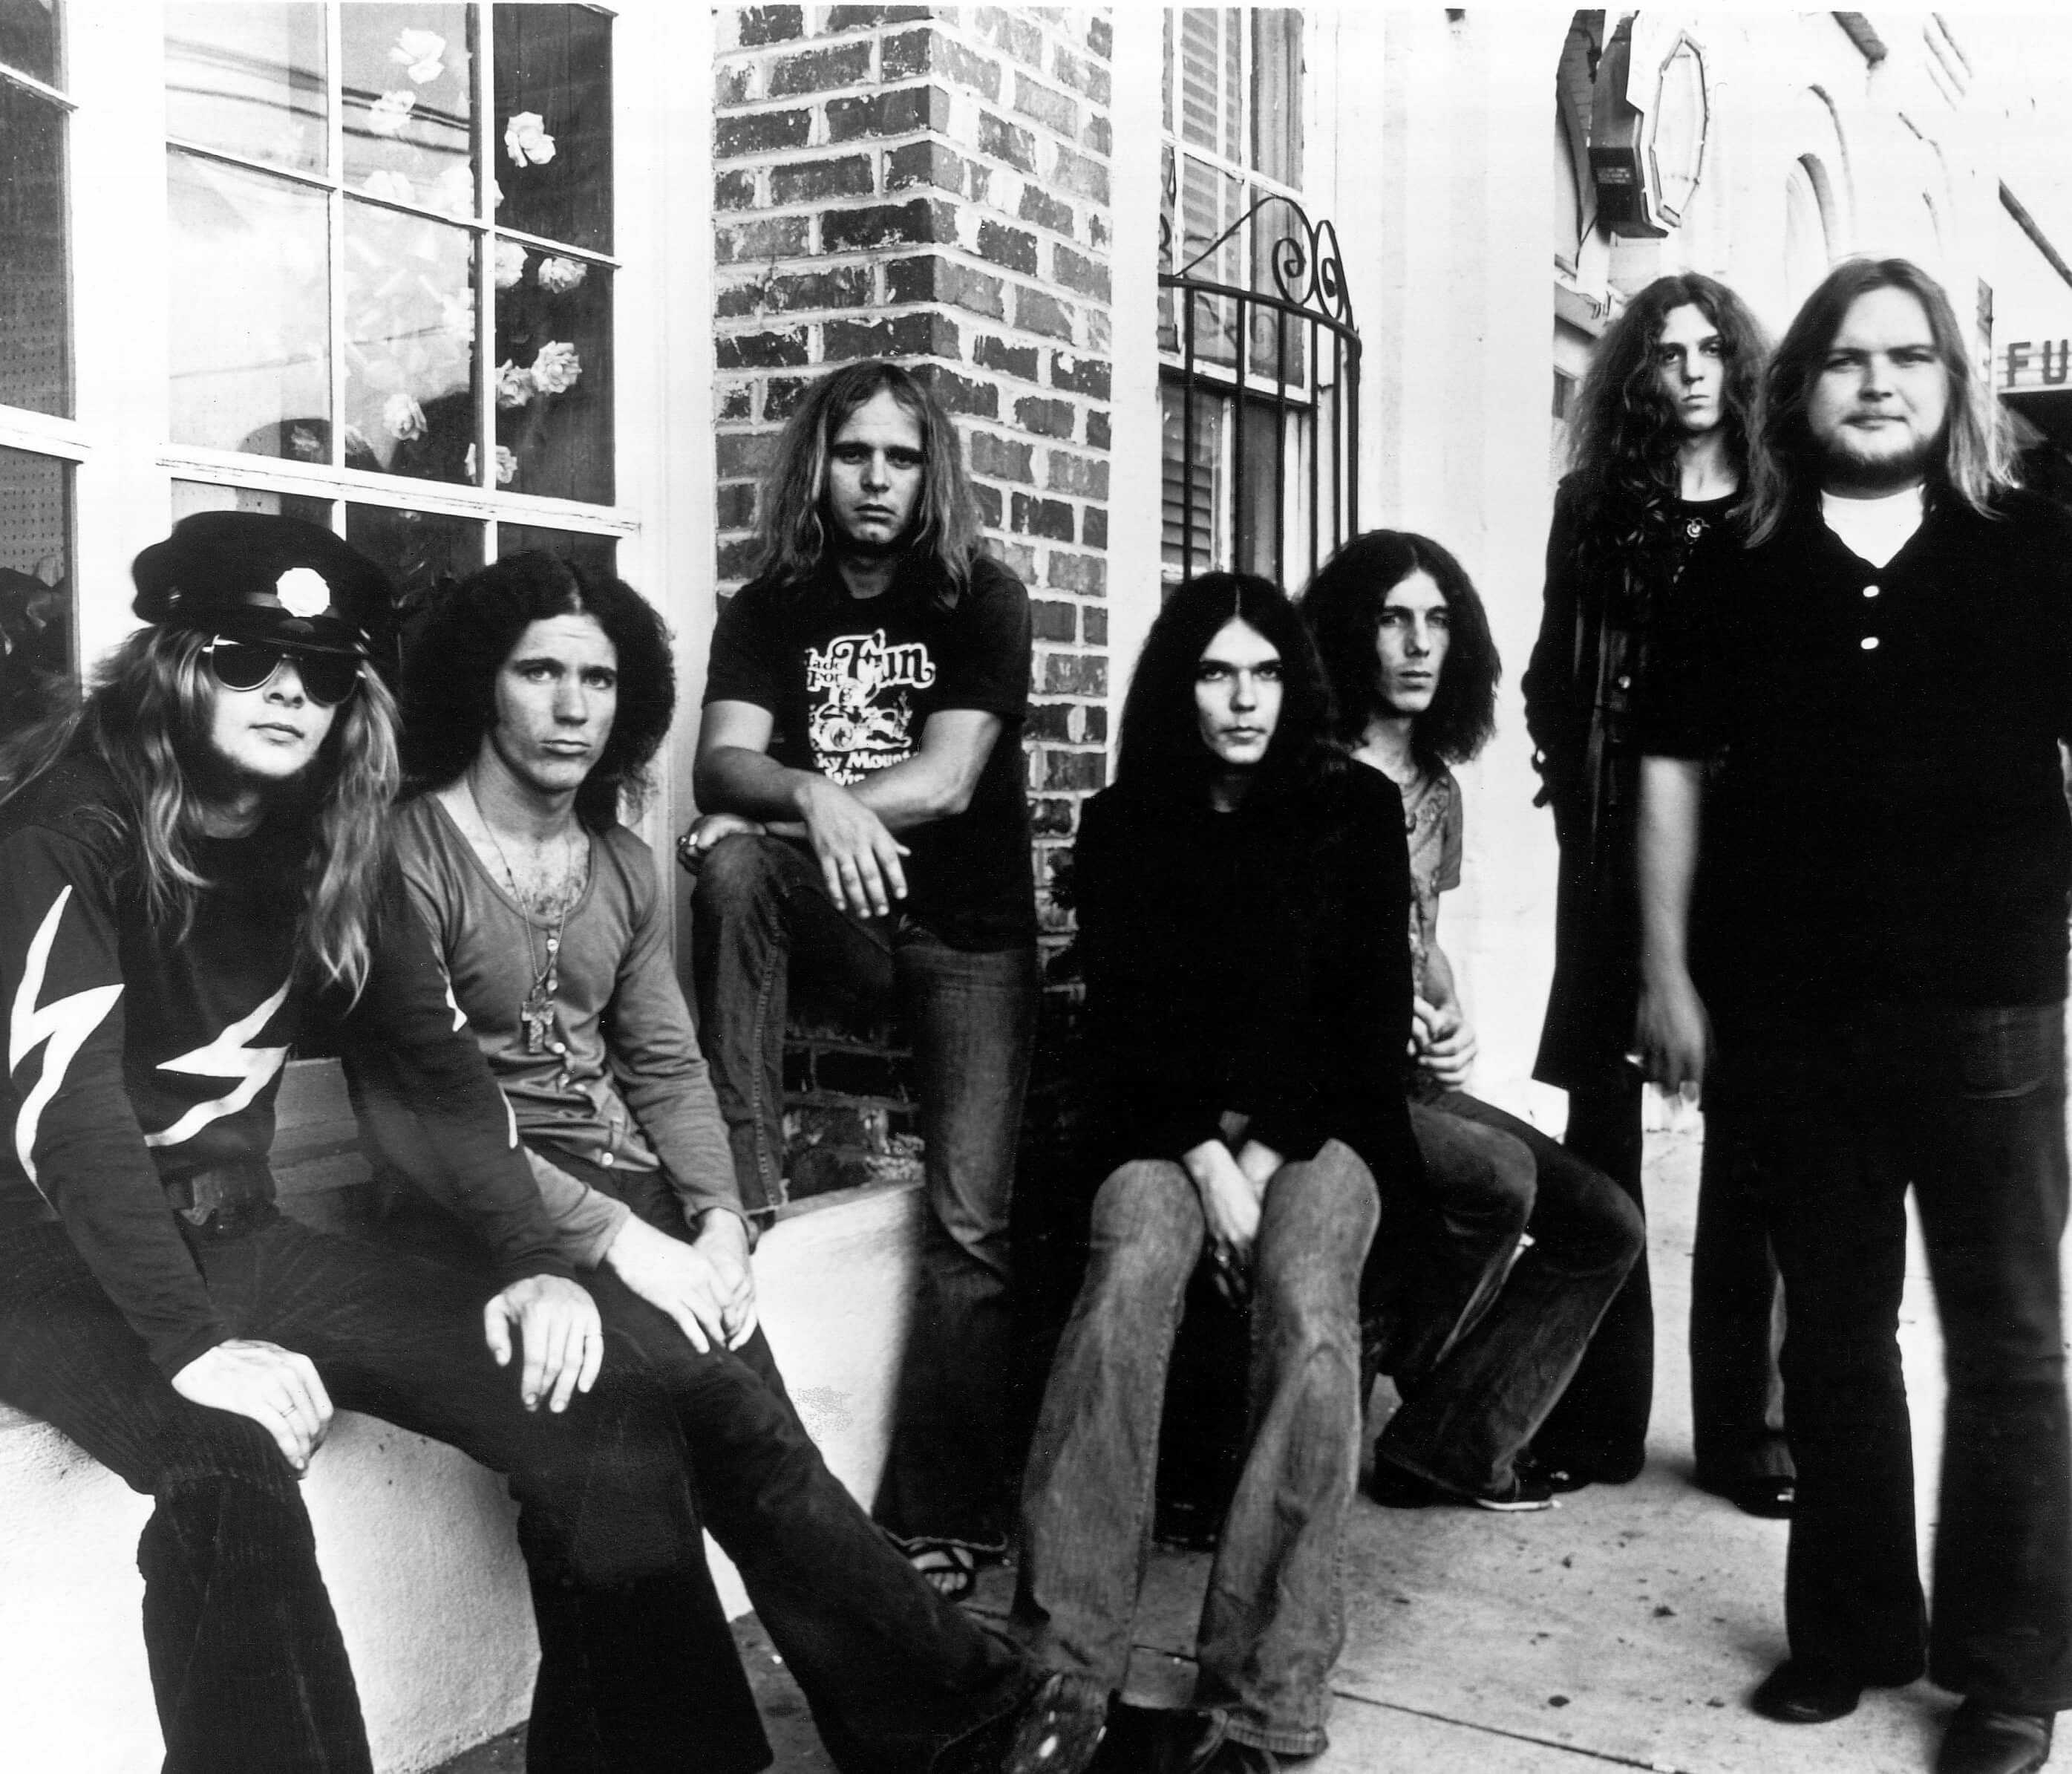 "Sweet Home Alabama" band Lynyrd Skynyrd in black-and-white